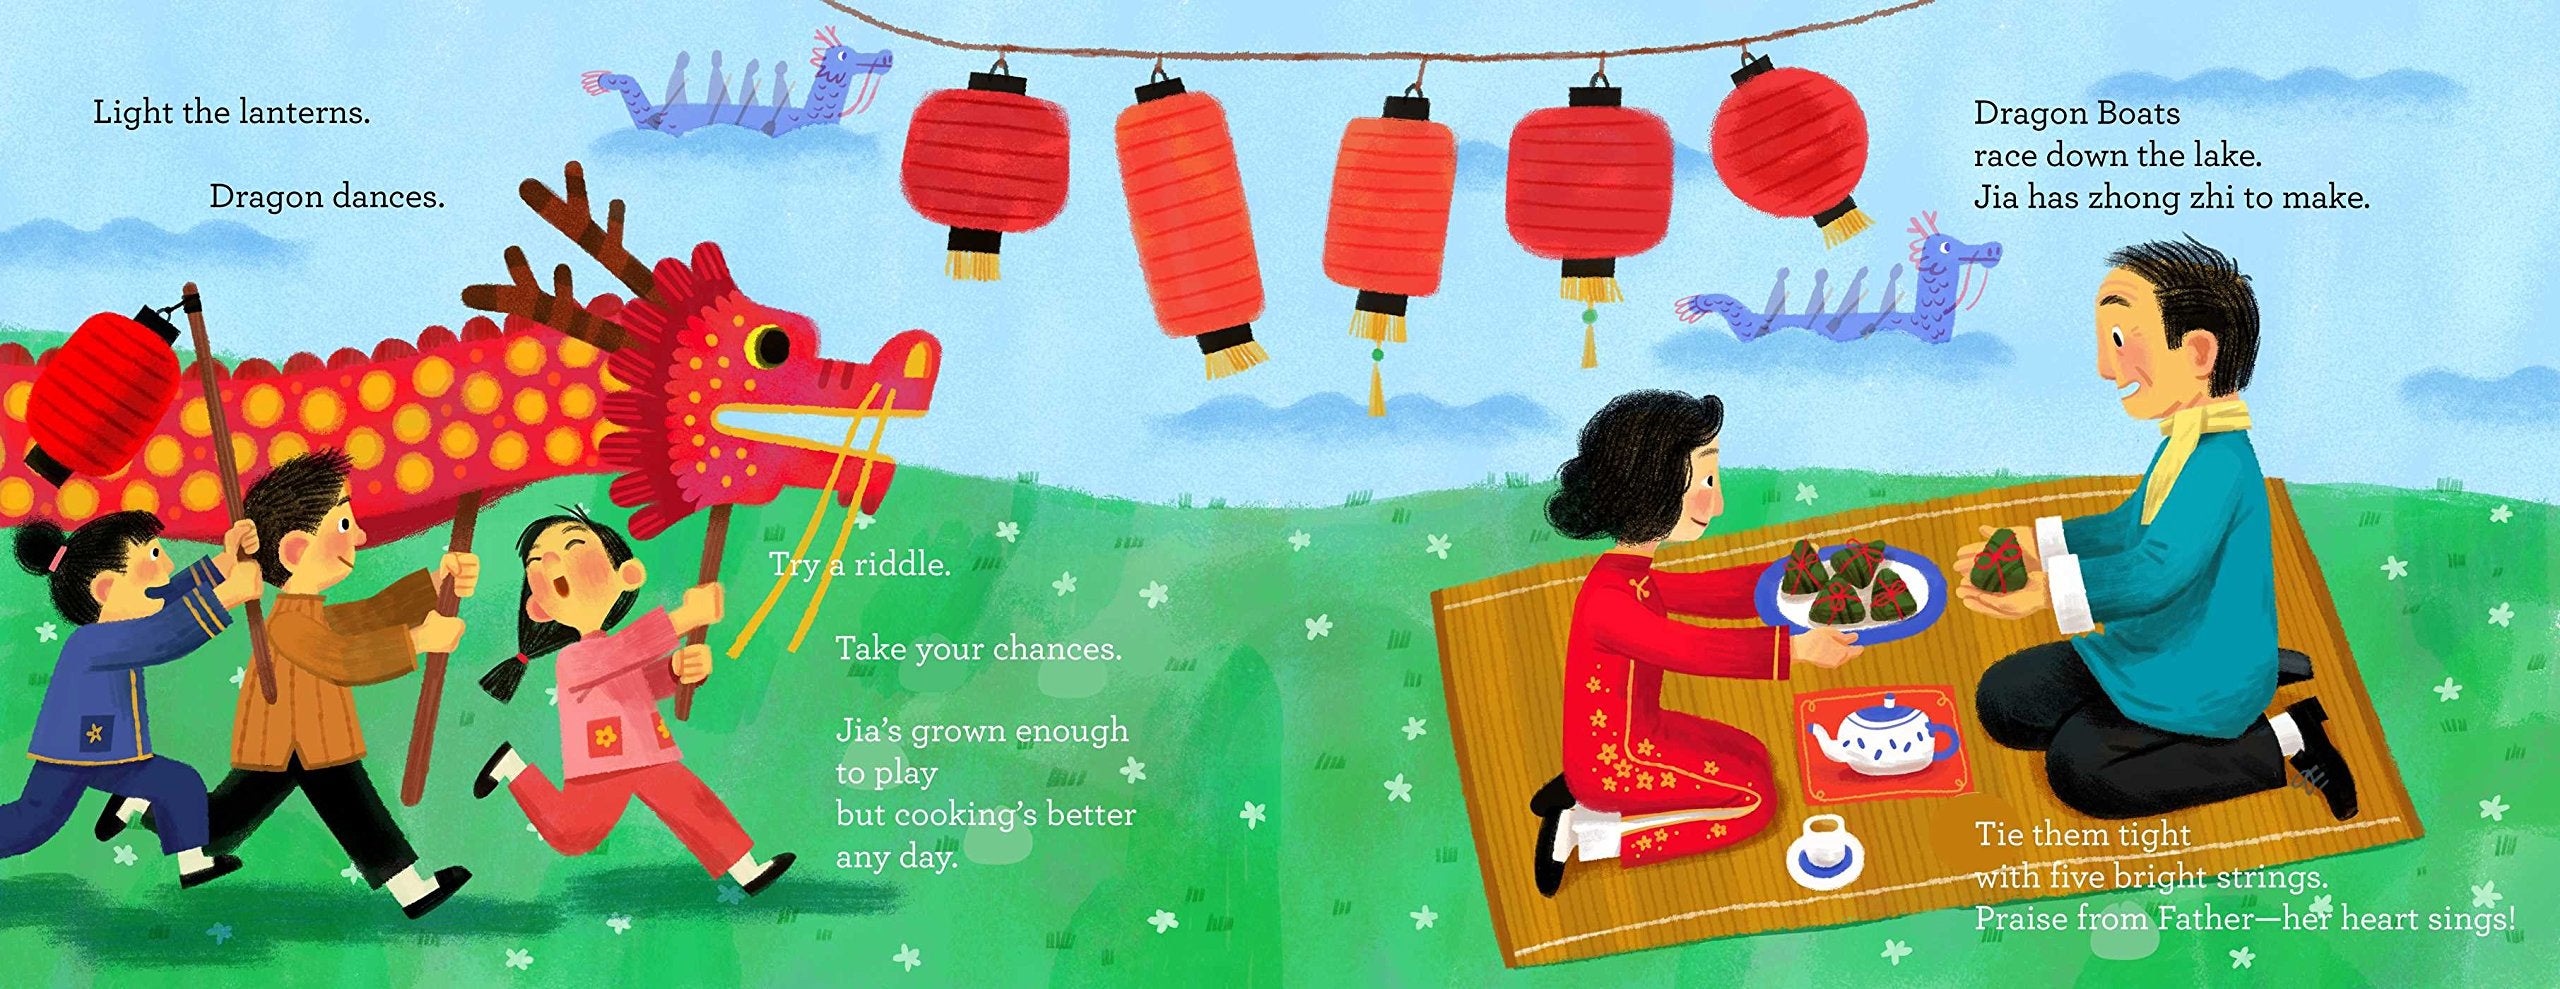 Dumpling Dreams: How Joyce Chen Brought the Dumpling from Beijing to Cambridge (Carrie Clickard, Katy Wu)